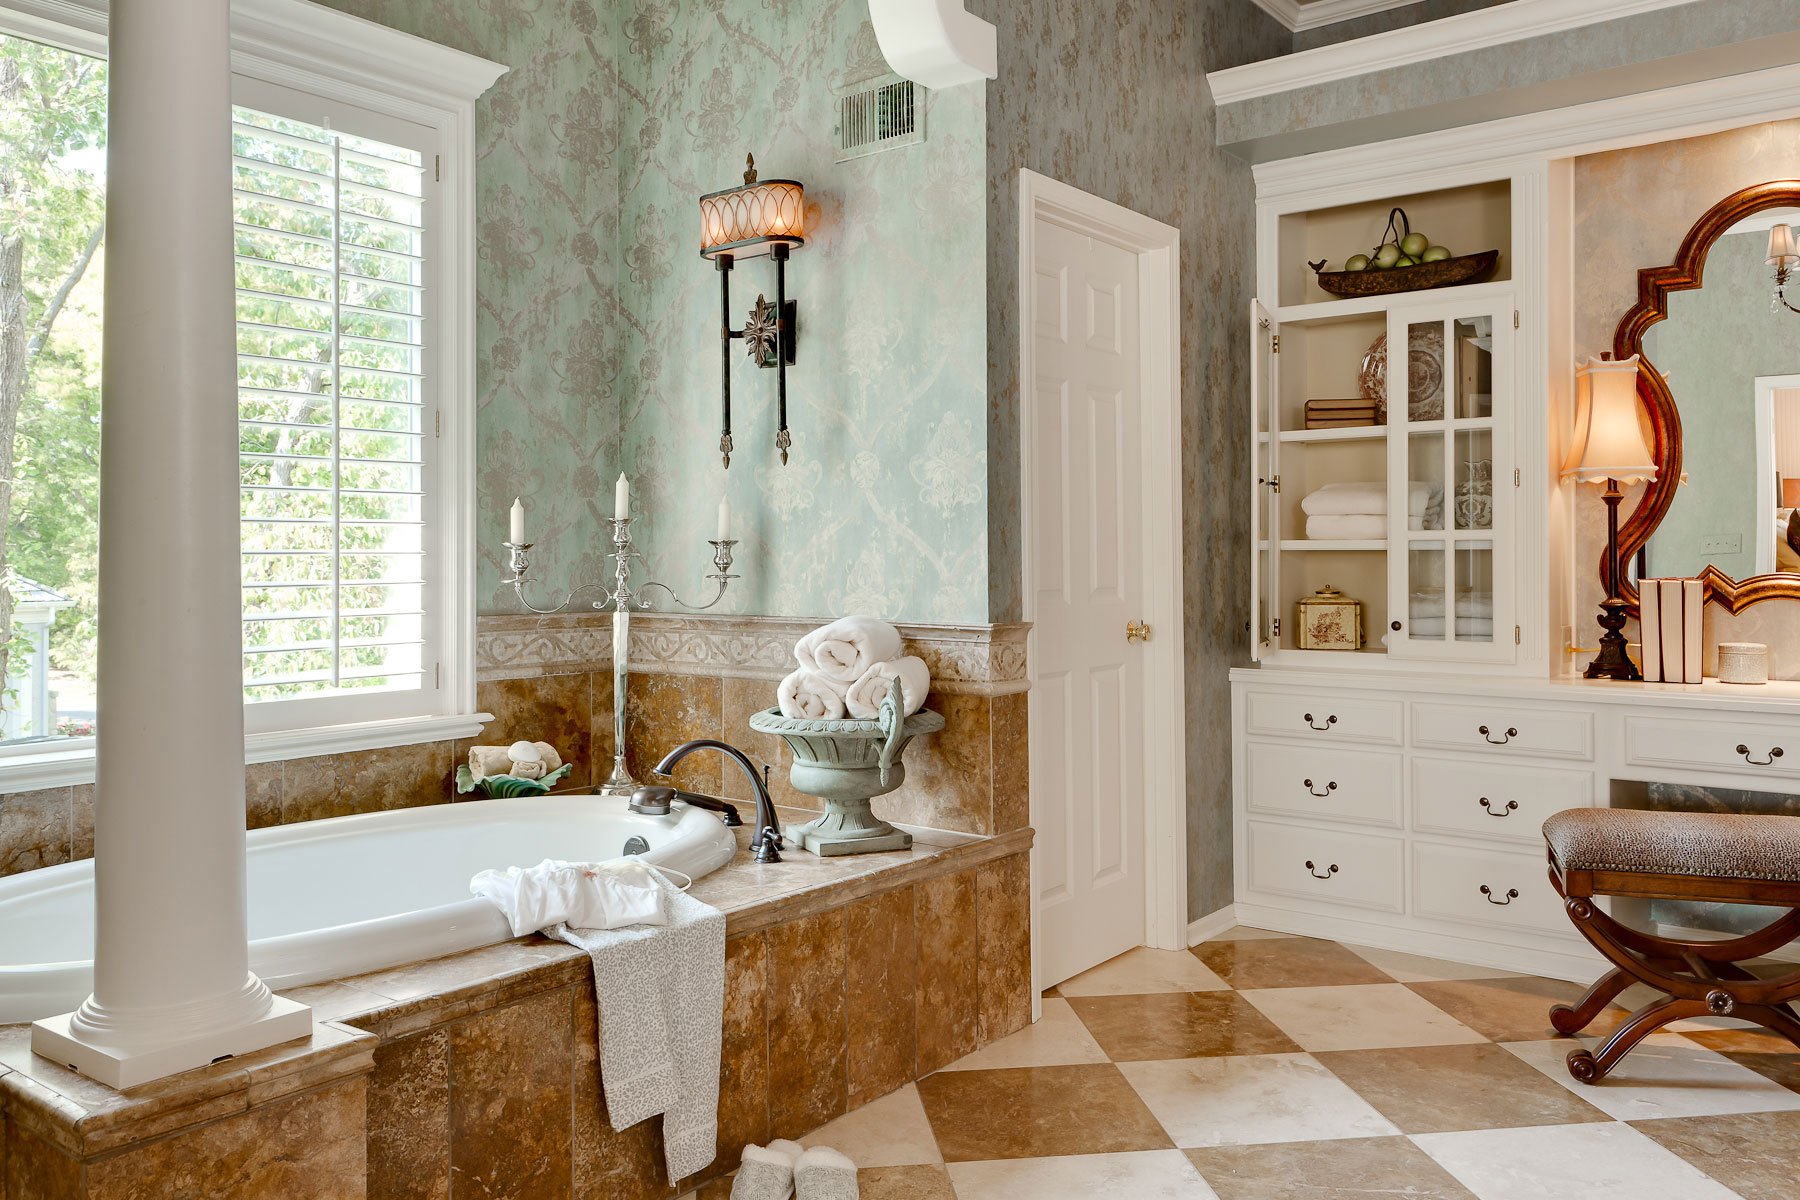 Amazing set of vintage style bathroom renovation ideas